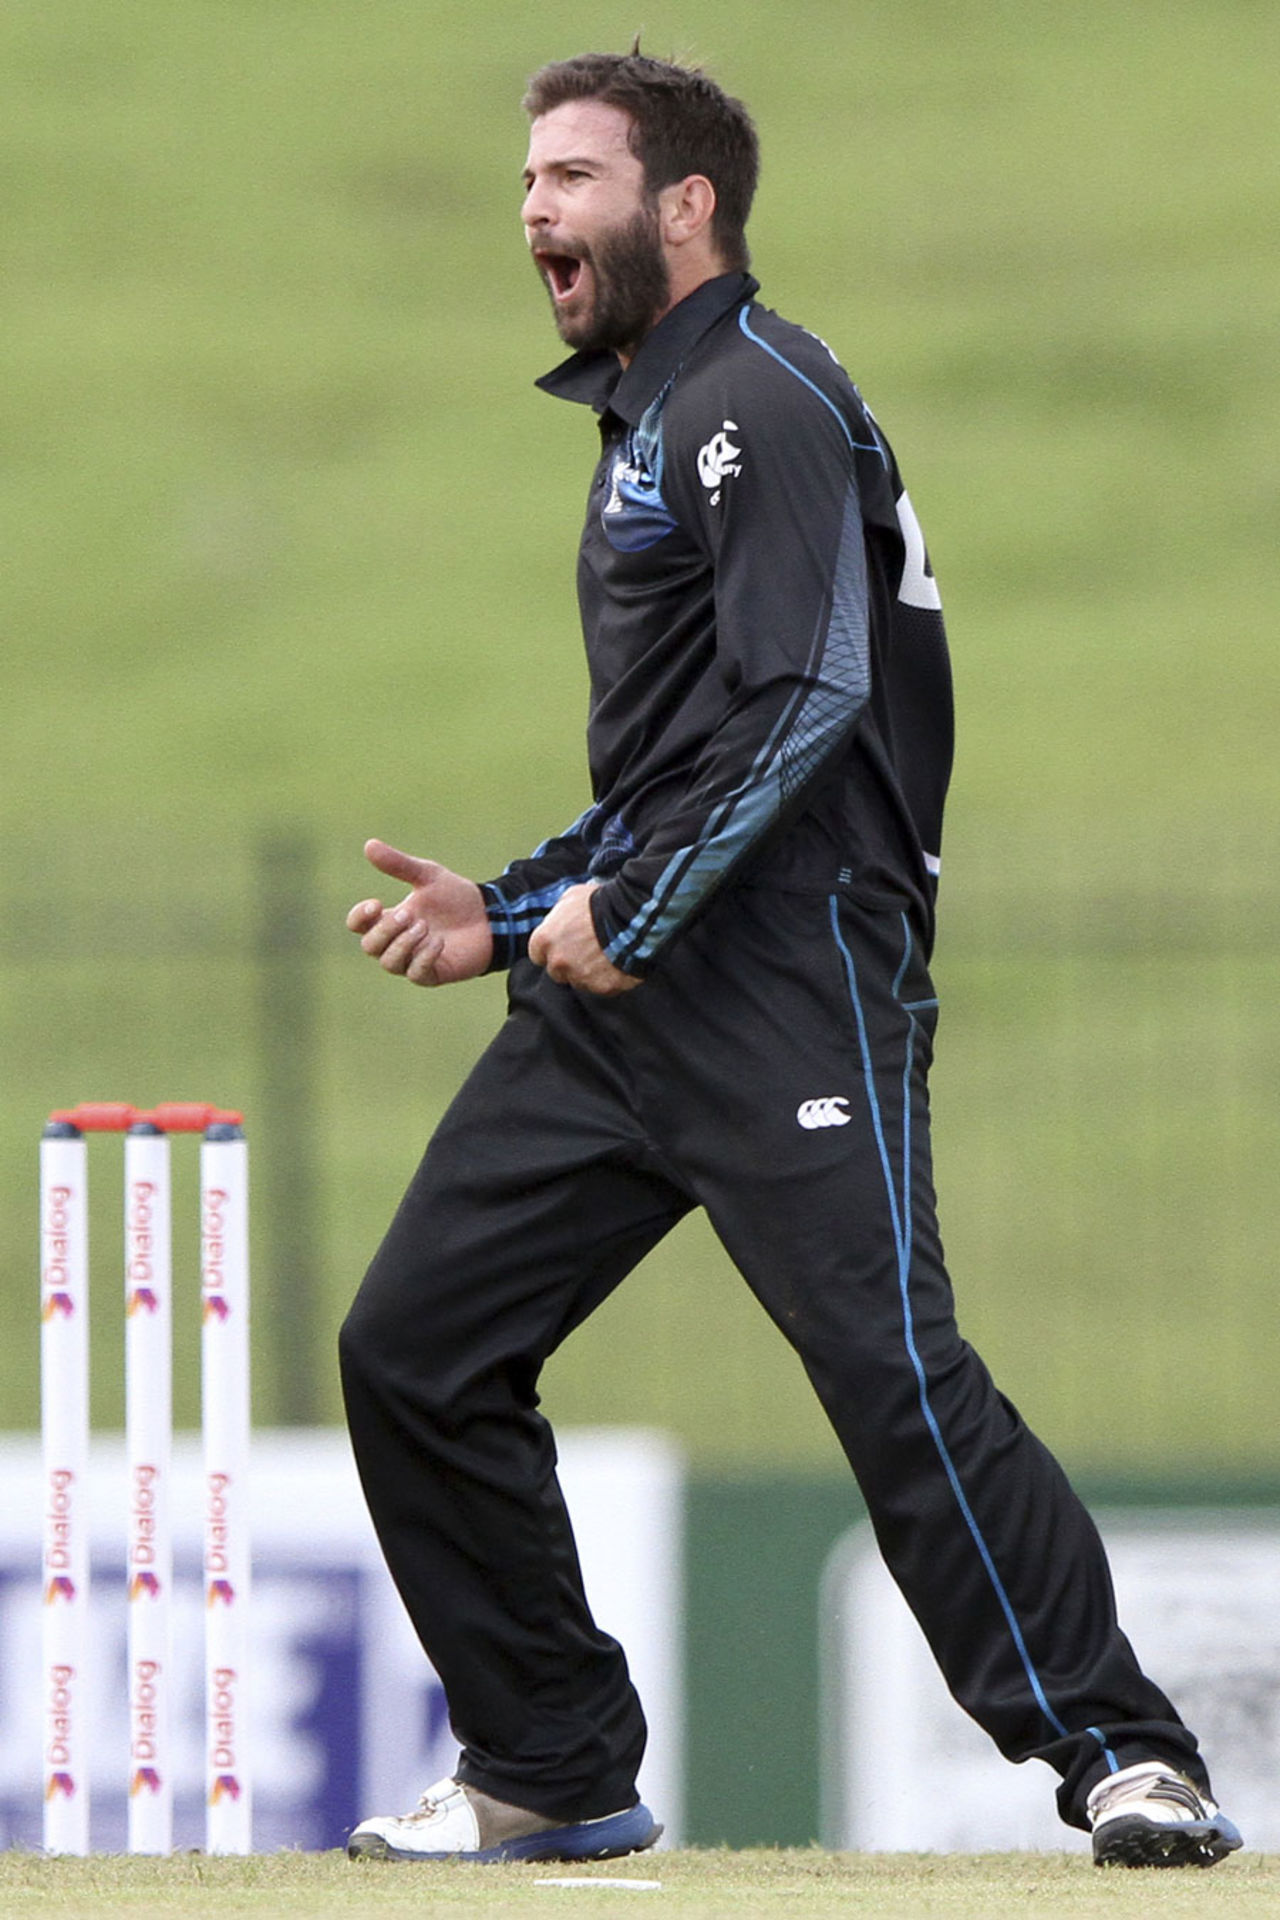 Anton Devcich picked up 2 for 33 in his 10 overs, Sri Lanka v New Zealand, 1st ODI, Hambantota, November 10, 2013